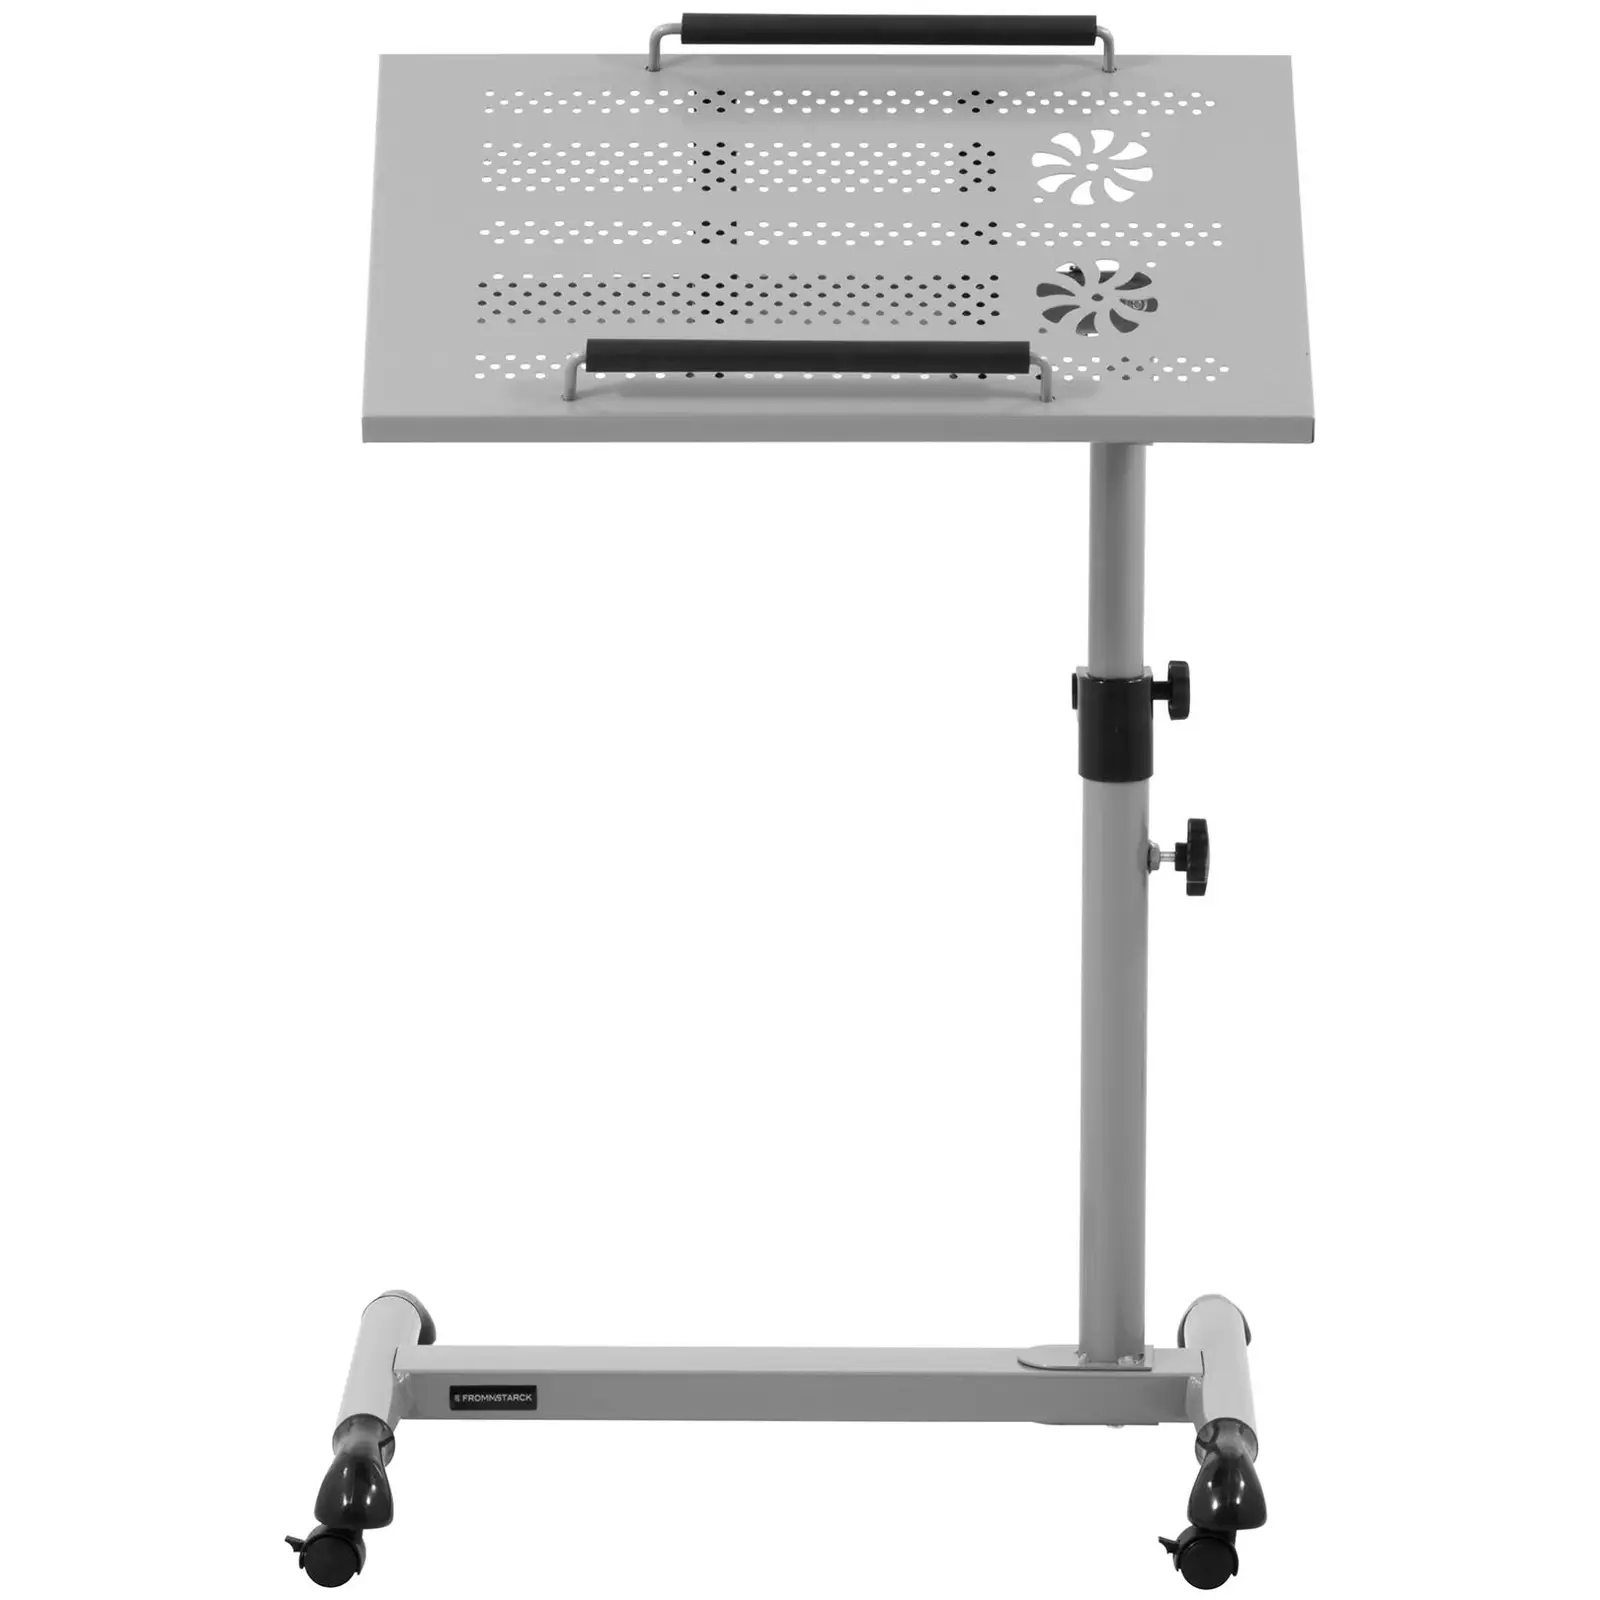 Stolik pod laptopa - regulacja wysokości 58-82 cm - kółka